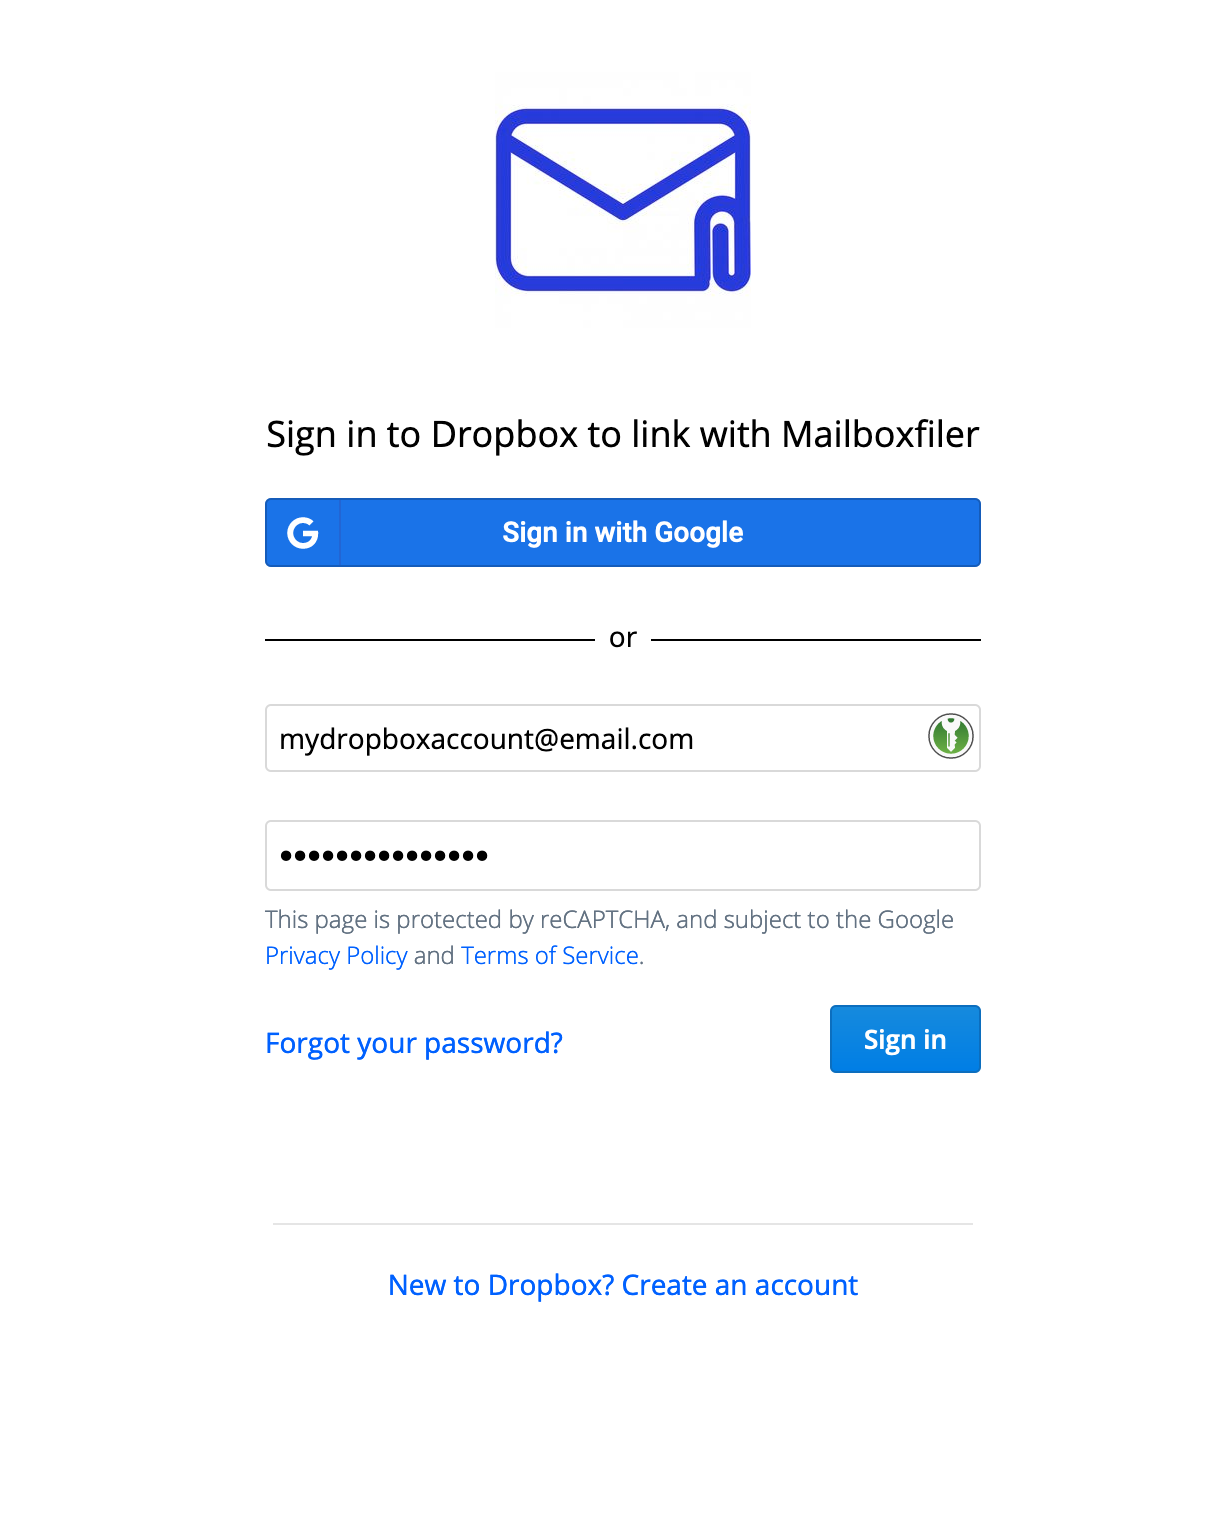 Authorize Mailboxfiler to Dropbox